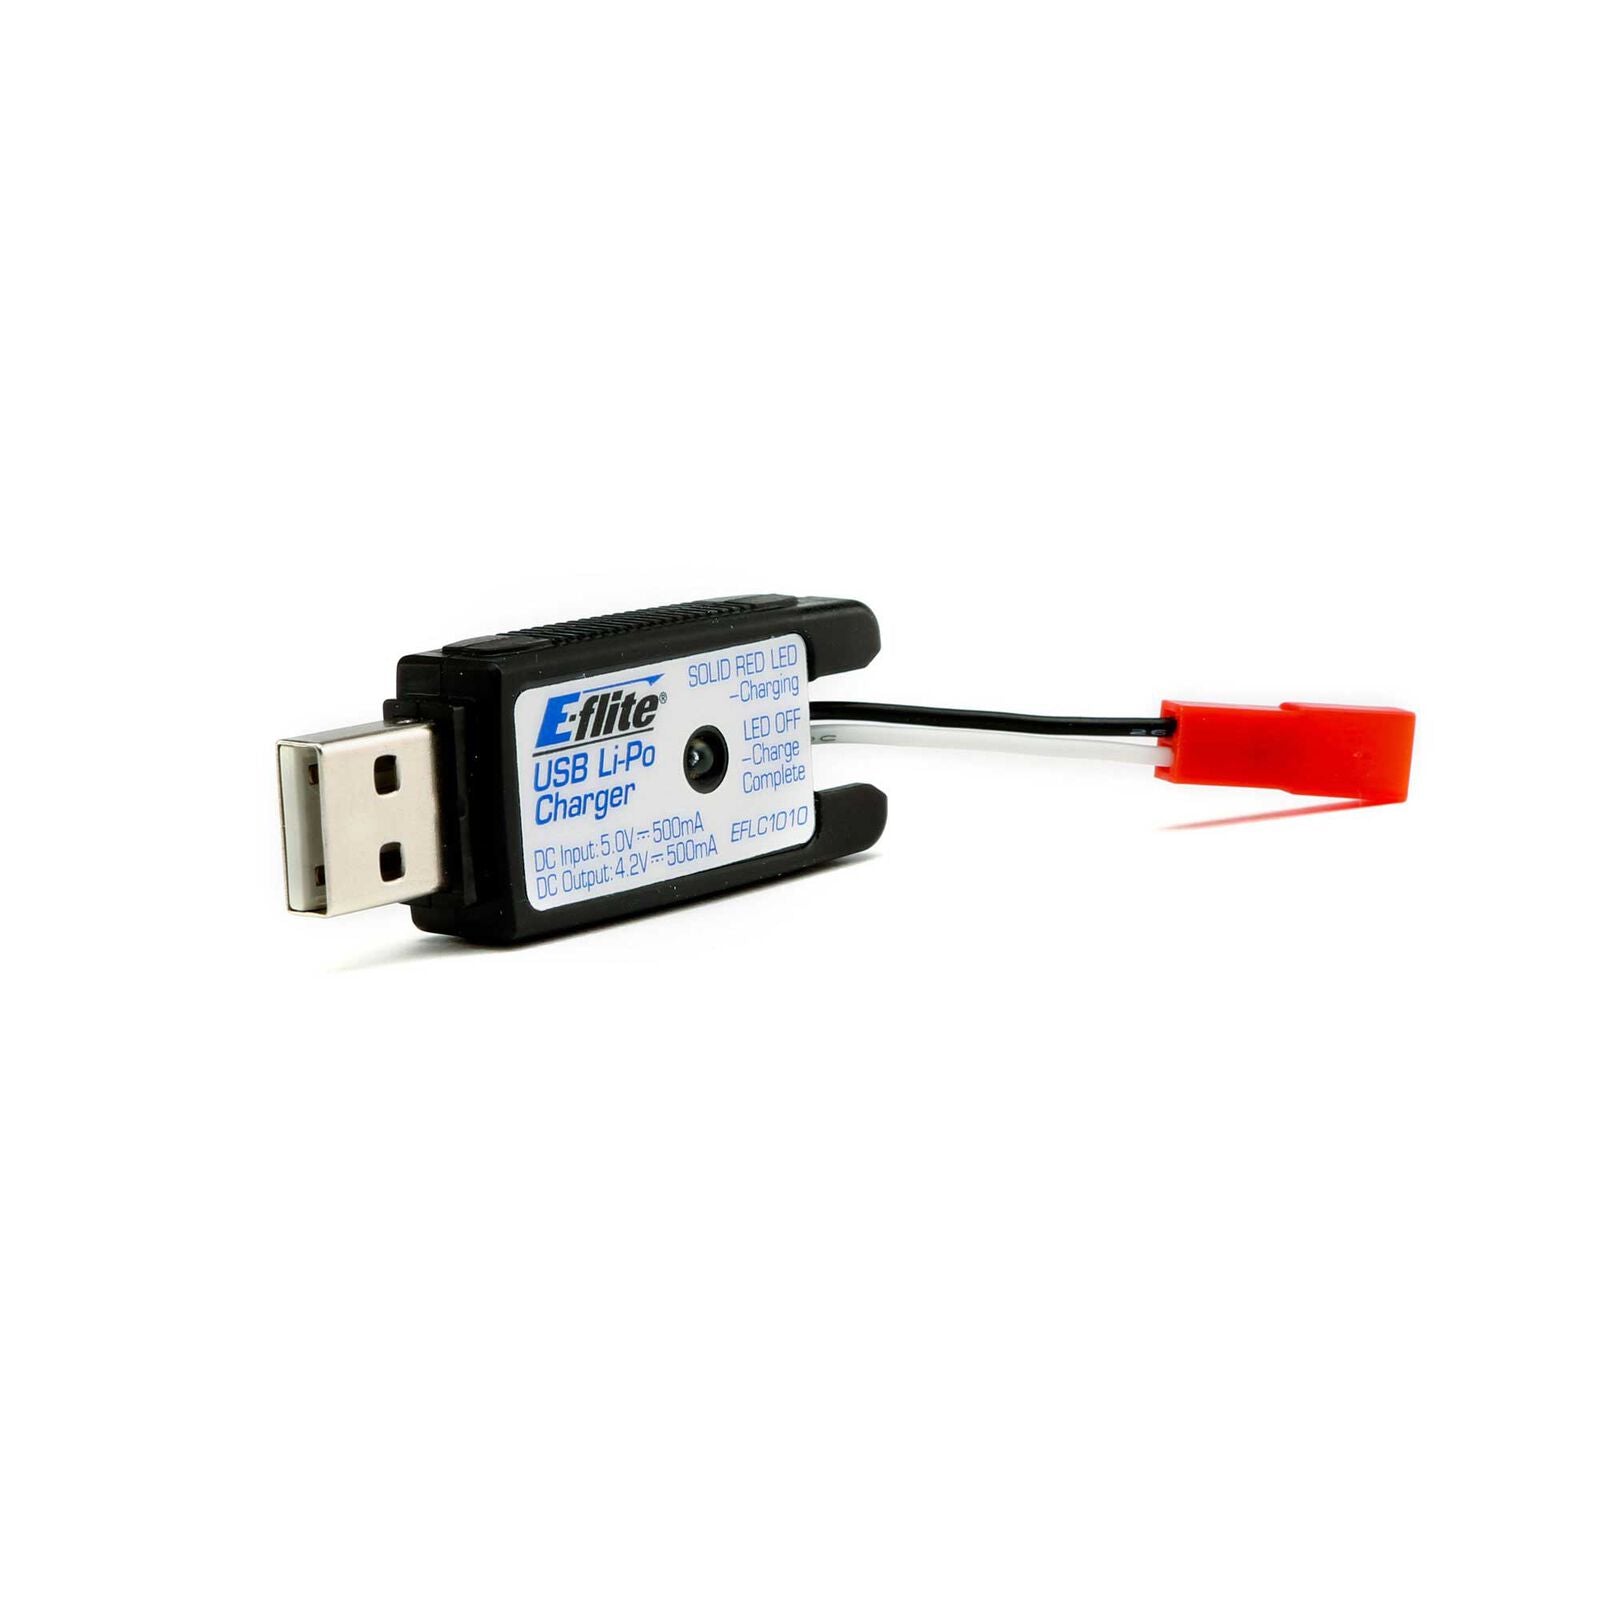 EFLITE EFLC1010 1S USB Li-Po Charger, 500mA, JST: 180 QX HD